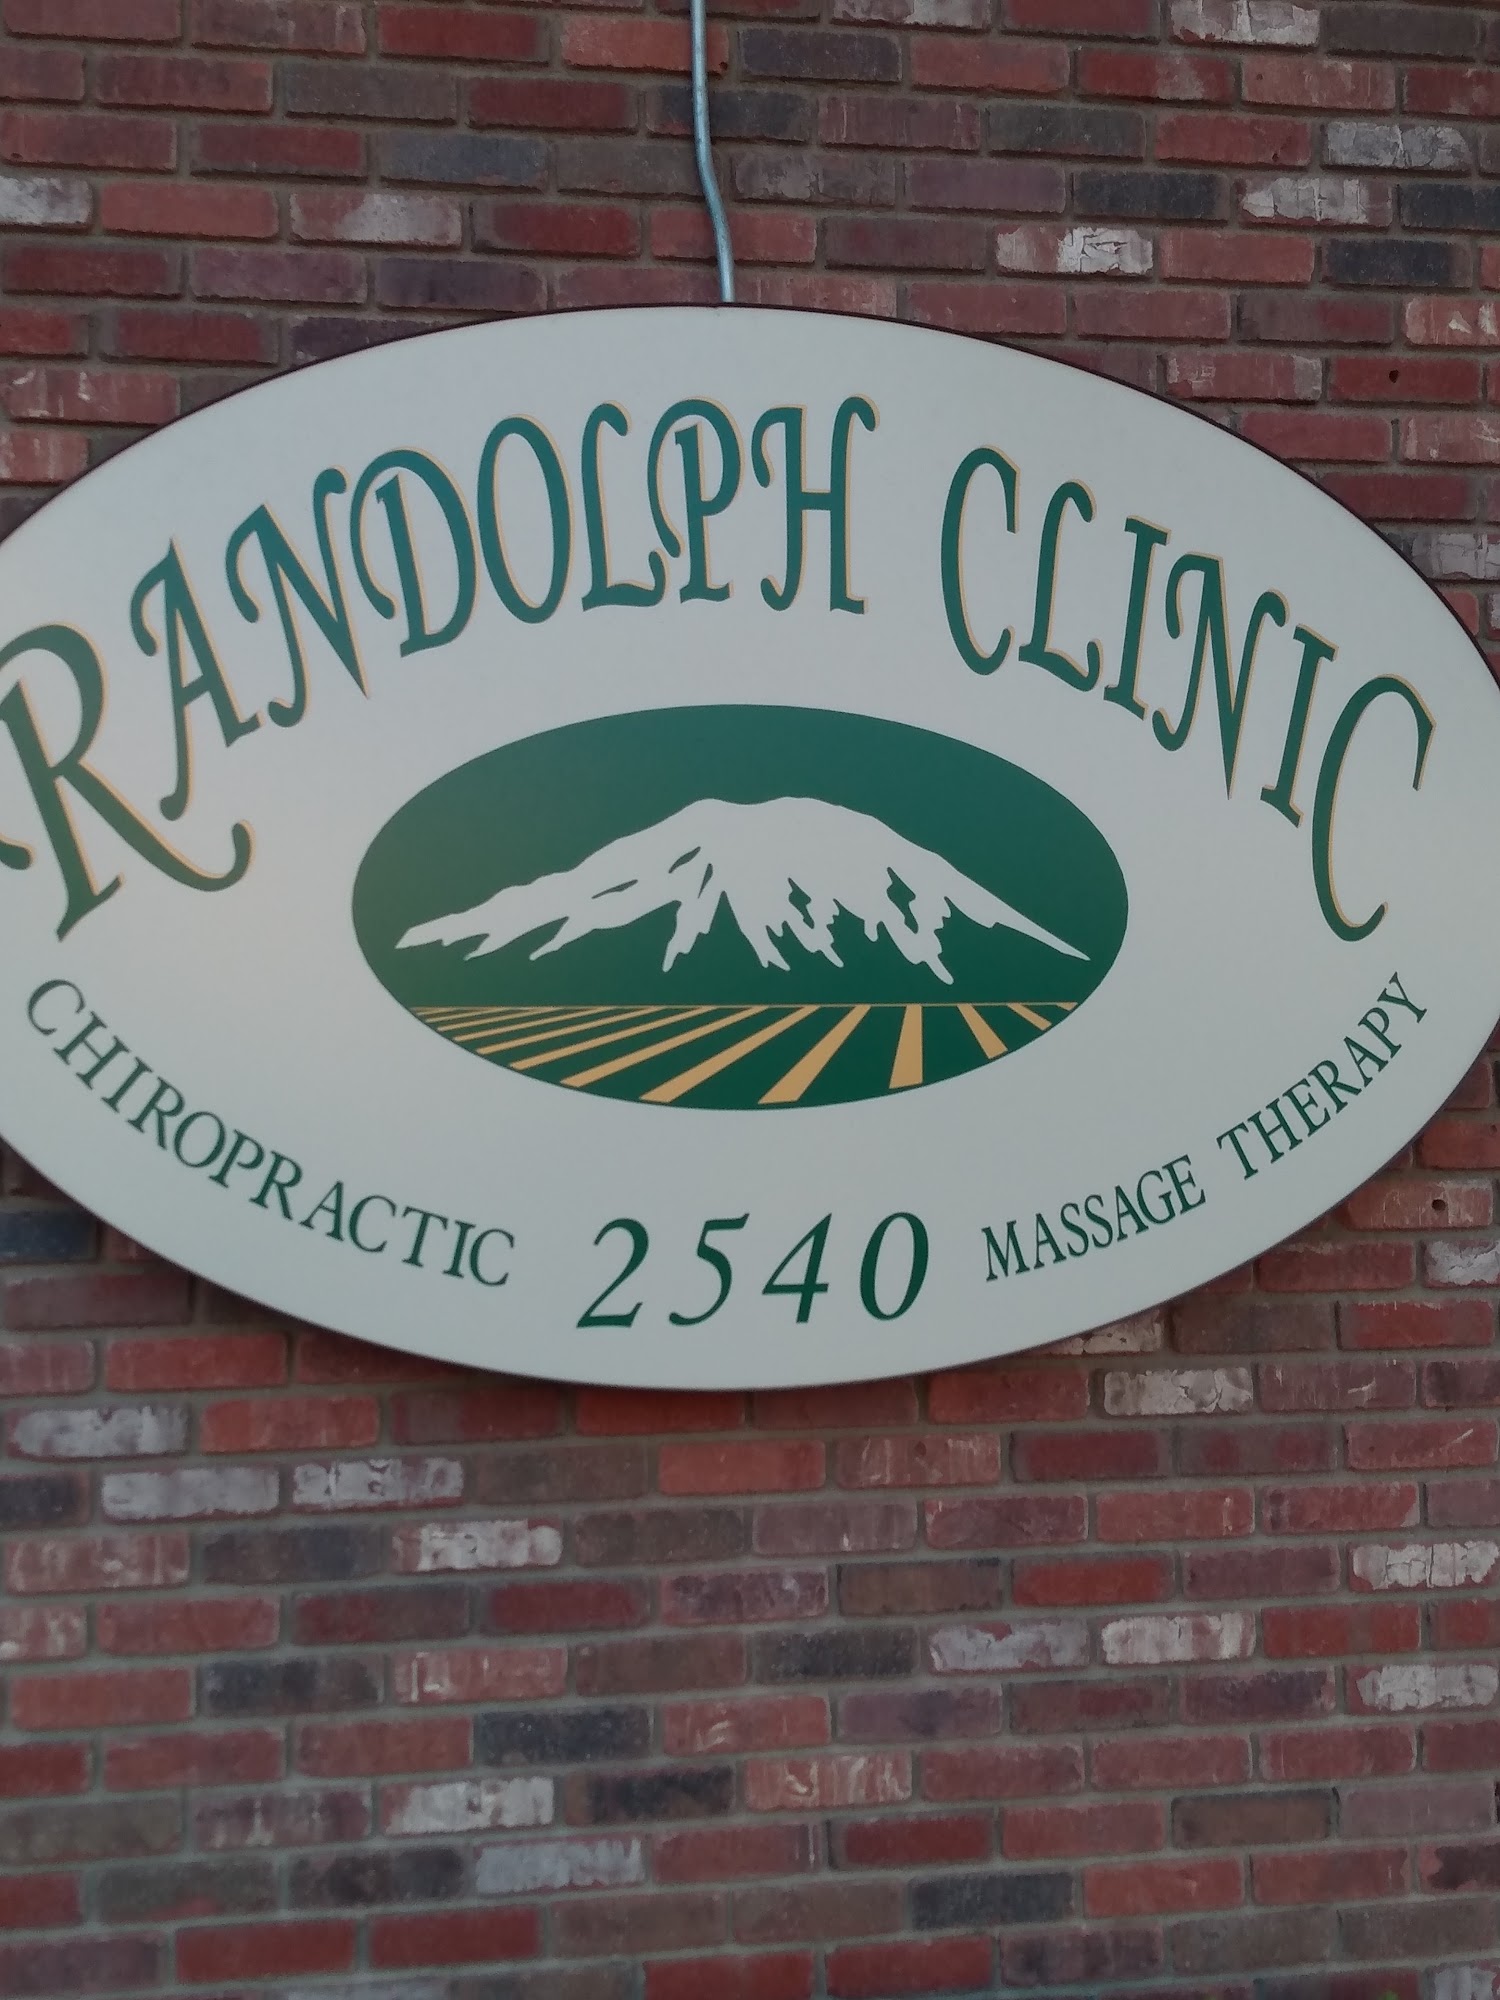 Randolph Clinic